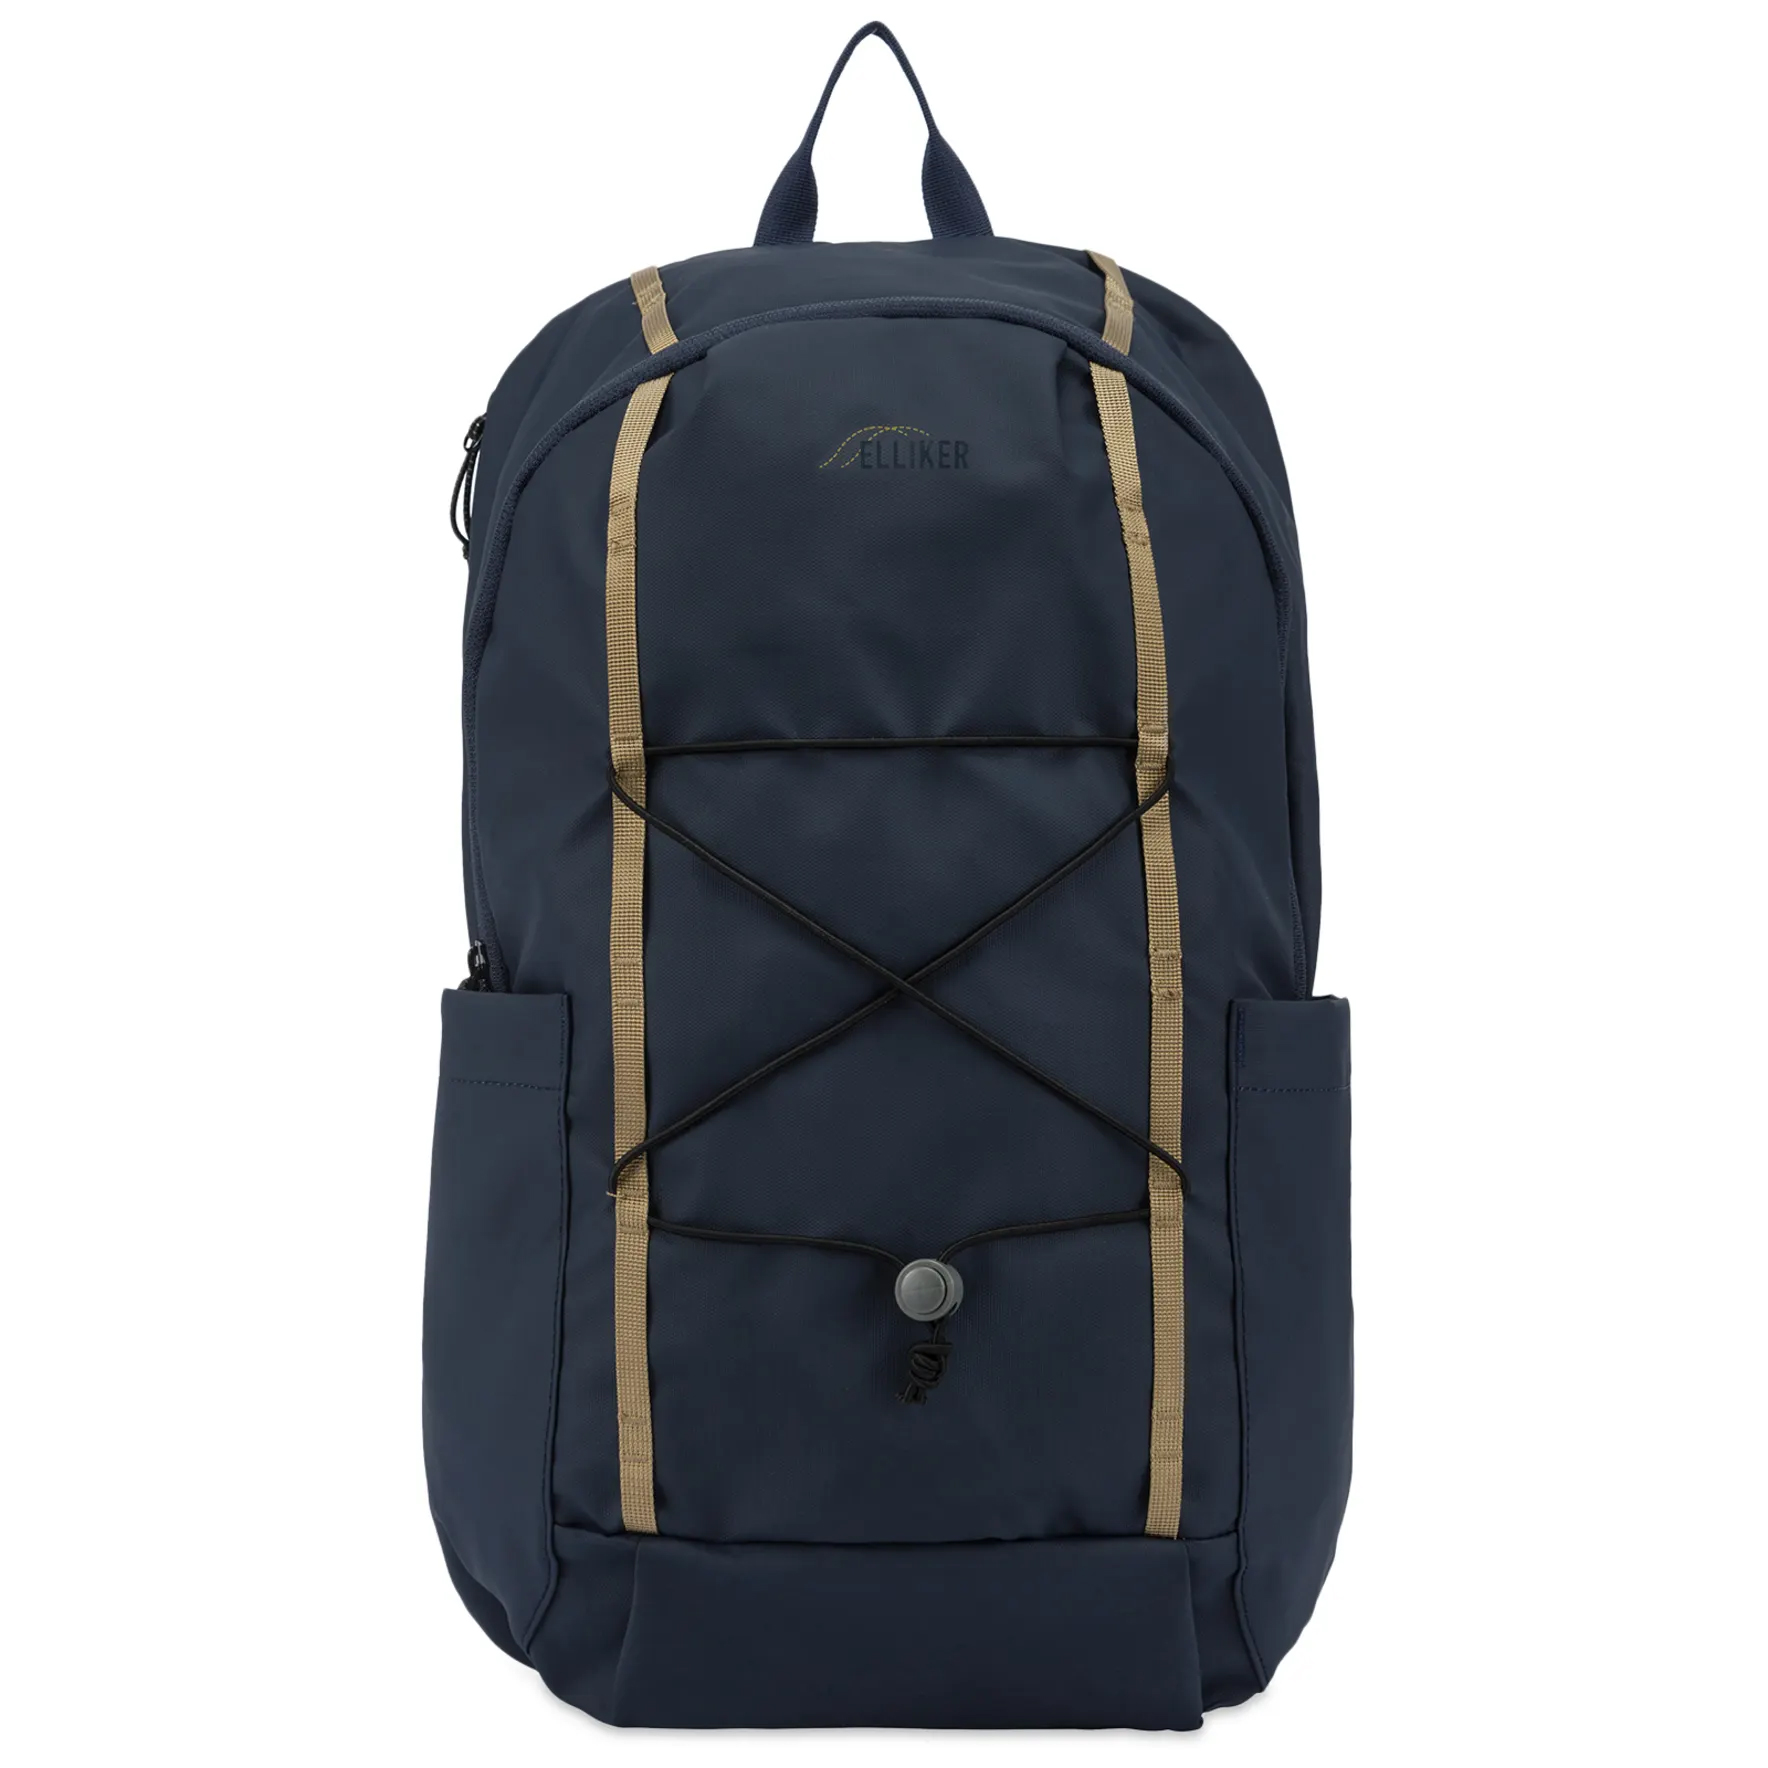 Рюкзак Elliker Keswick Zip-Top Backpack, темно-синий рюкзак elliker dayle brown